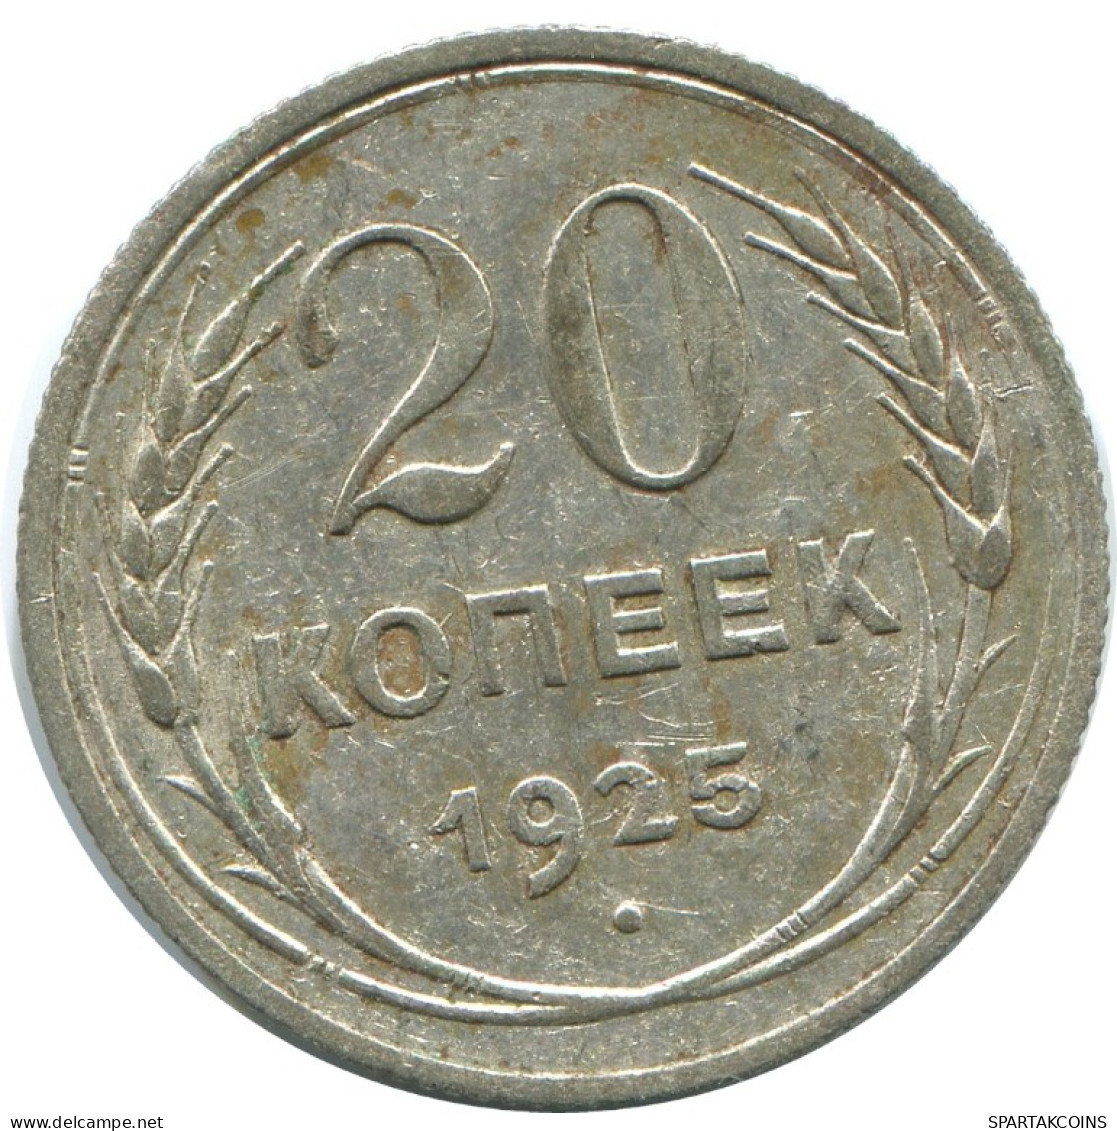 20 KOPEKS 1925 RUSIA RUSSIA USSR PLATA Moneda HIGH GRADE #AF310.4.E.A - Russia